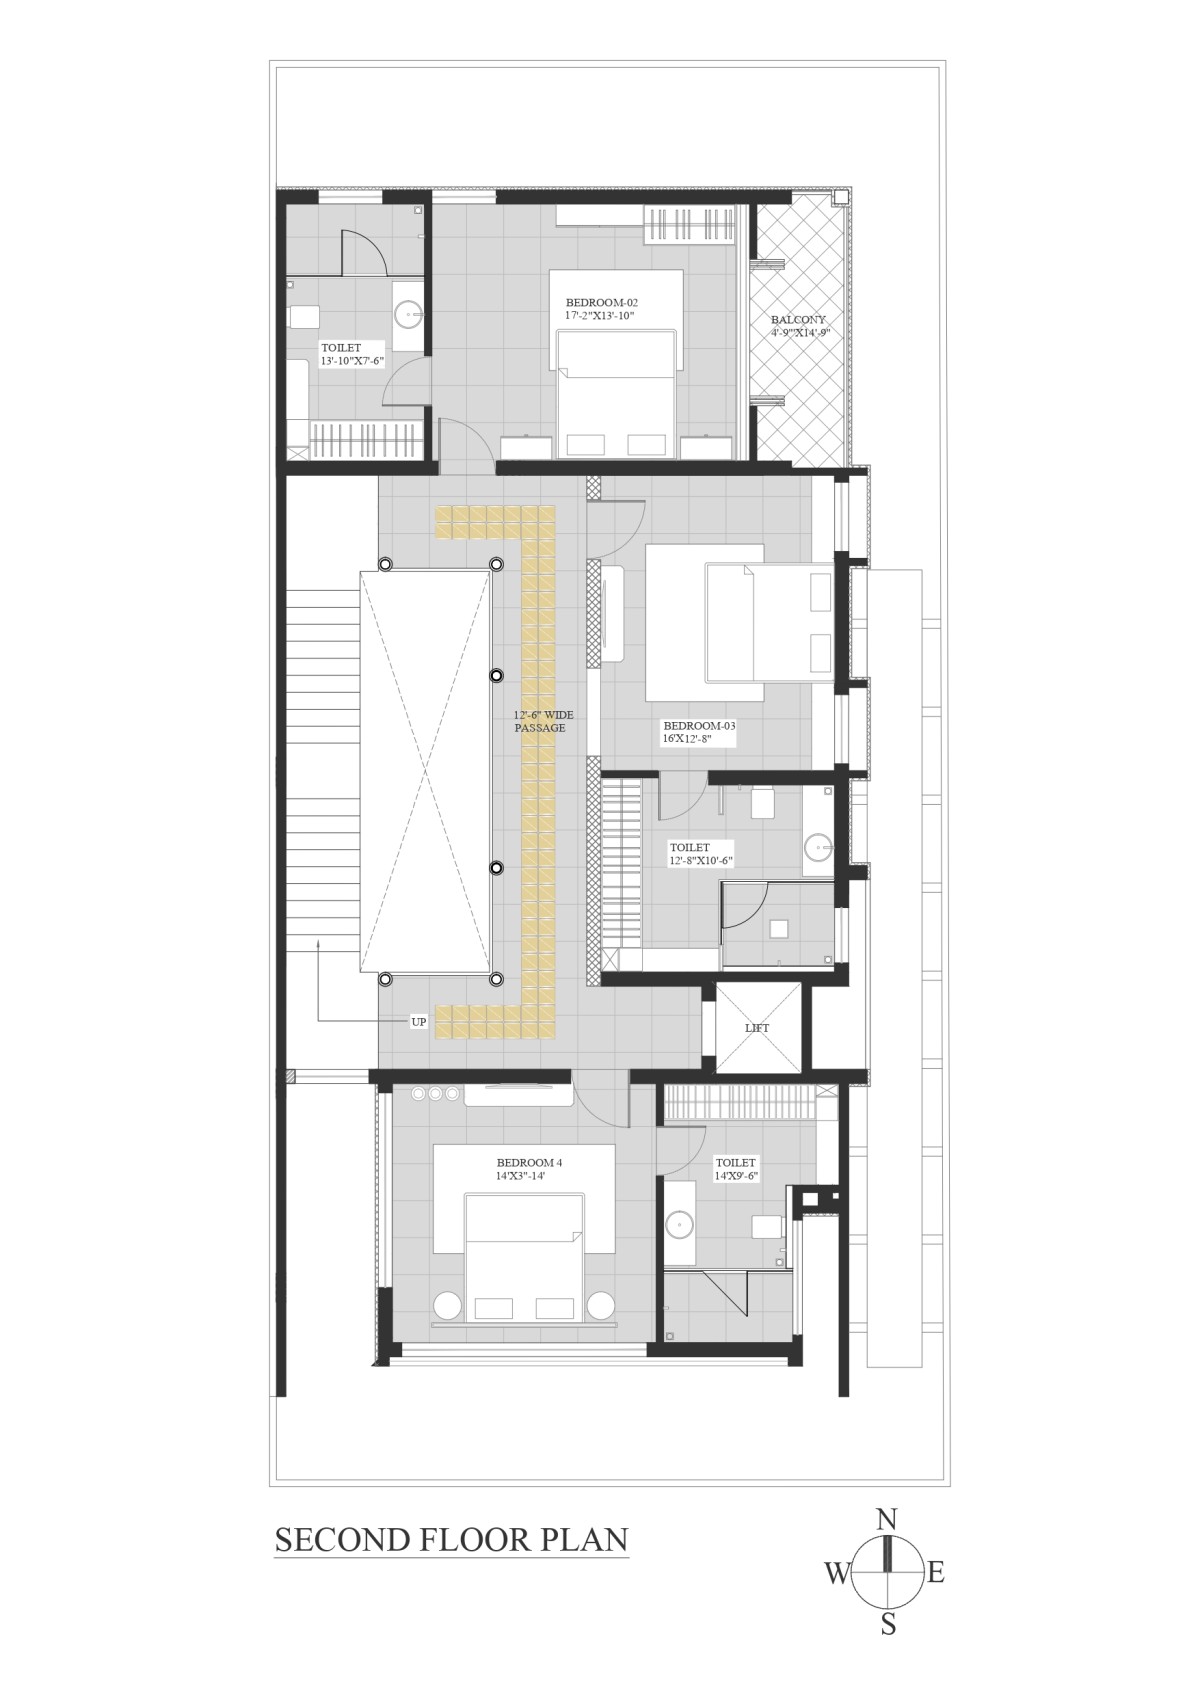 Second floor plan of An Indian Abode by K.N. Associates